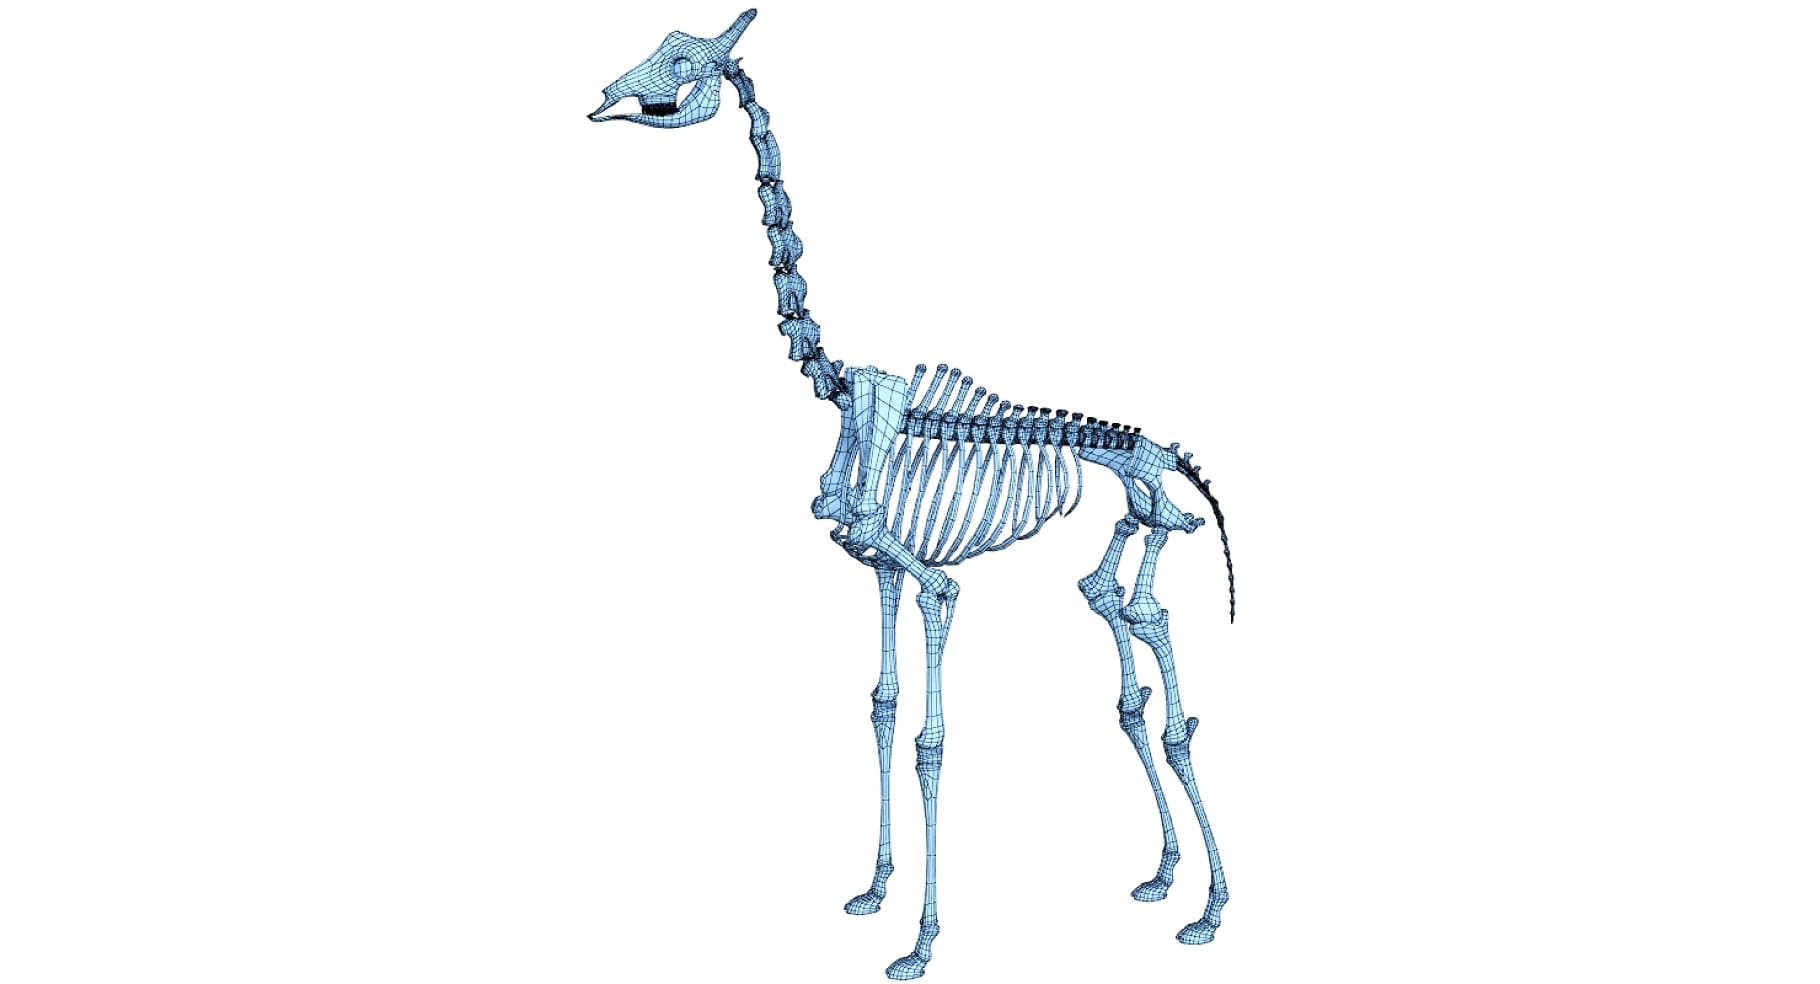 Image of a blue 3D model of a giraffe skeleton.